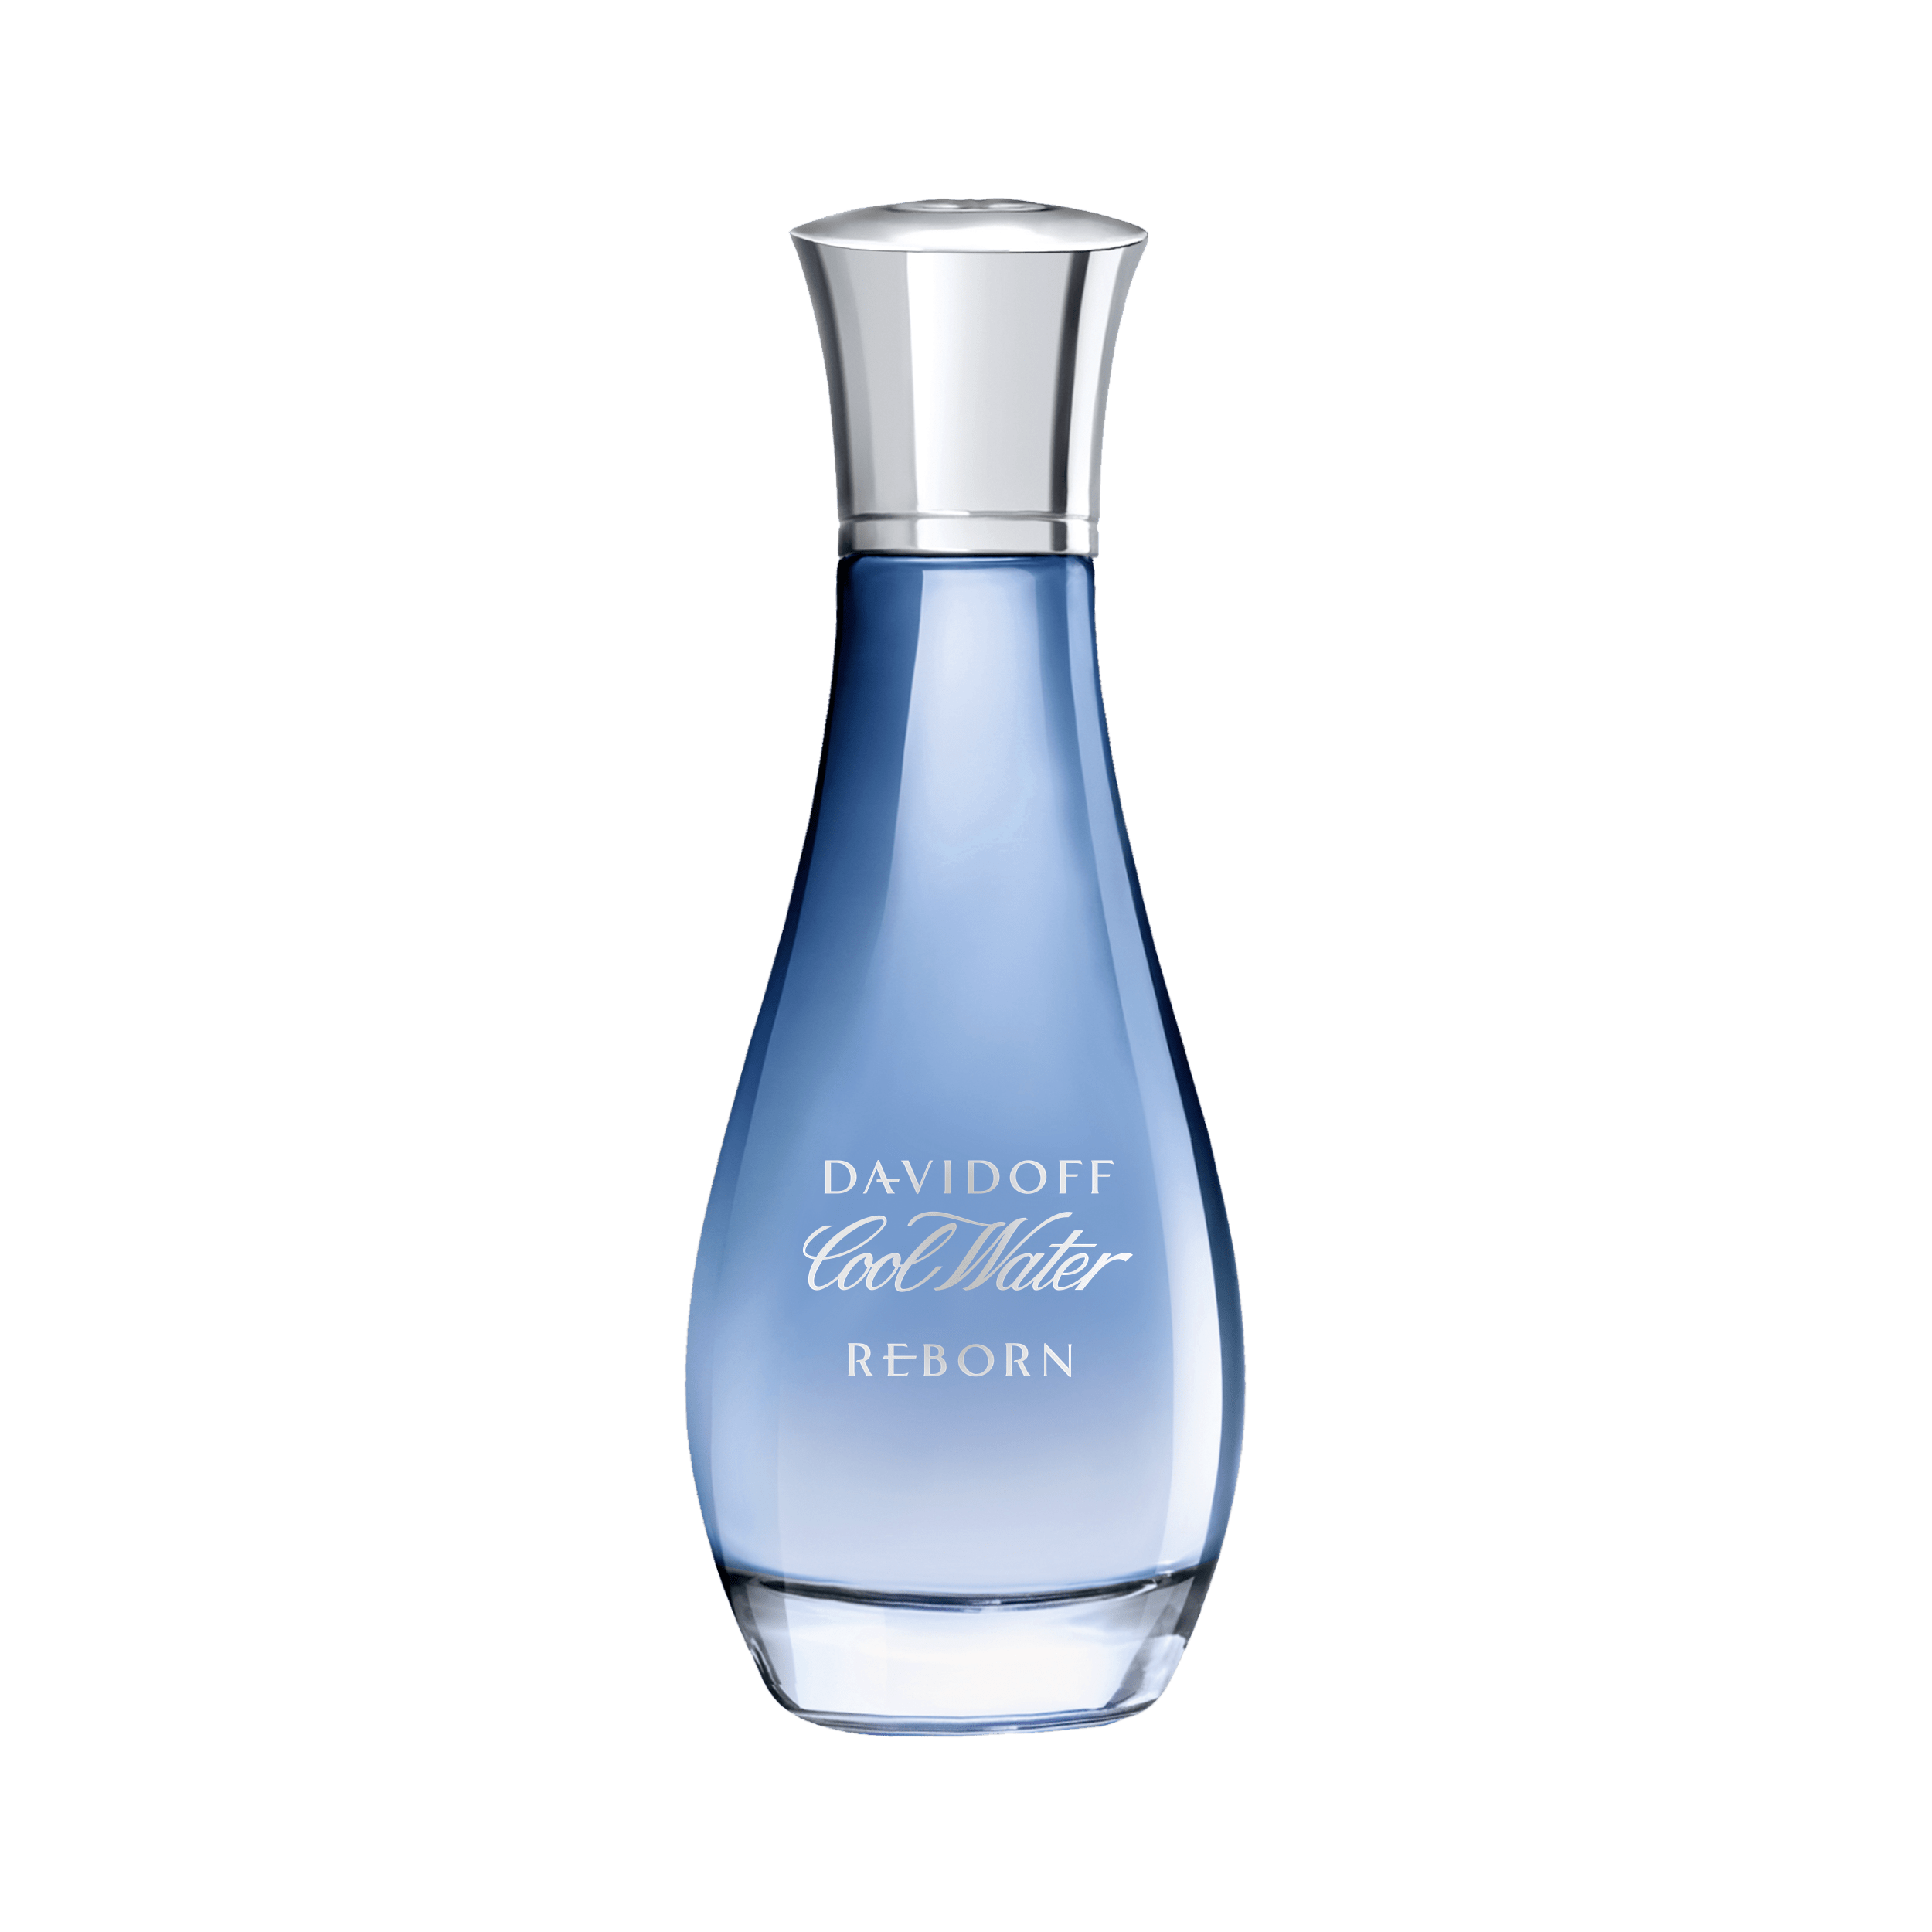 Cool Water Intense EDP Spray Perfume for Women by Davidoff